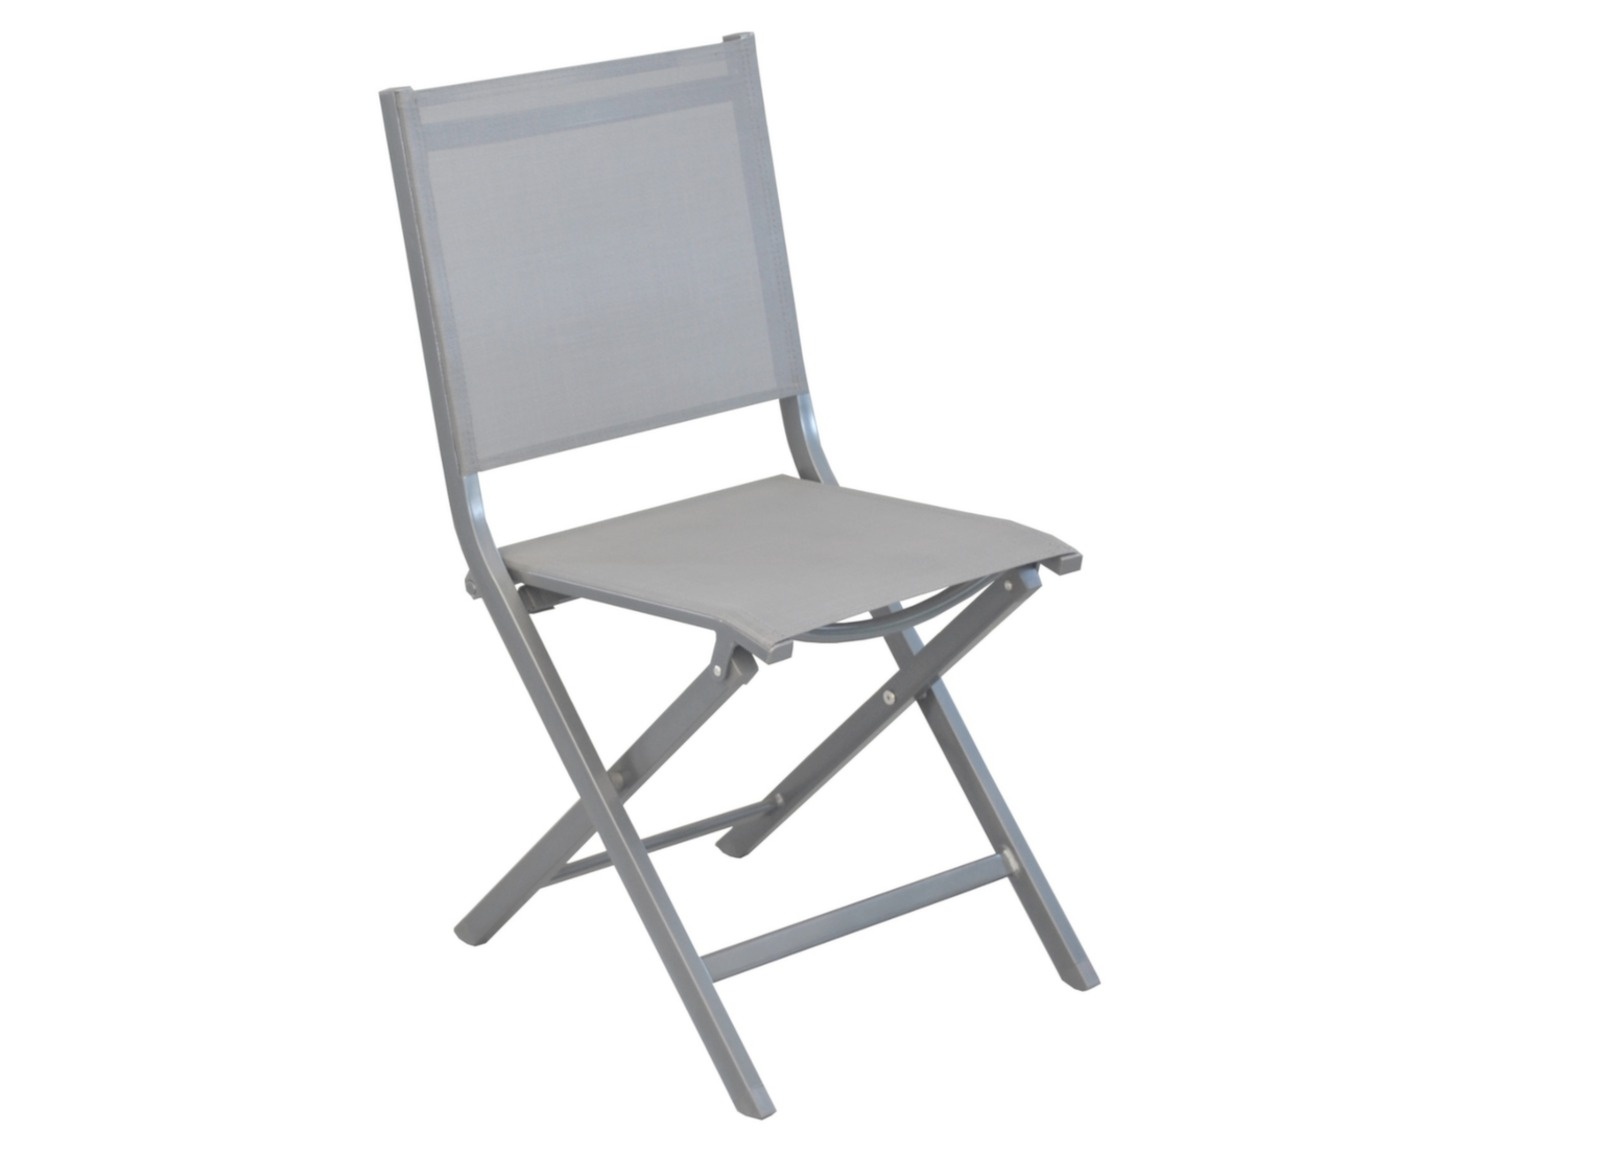 homegarden texitlene folding chair